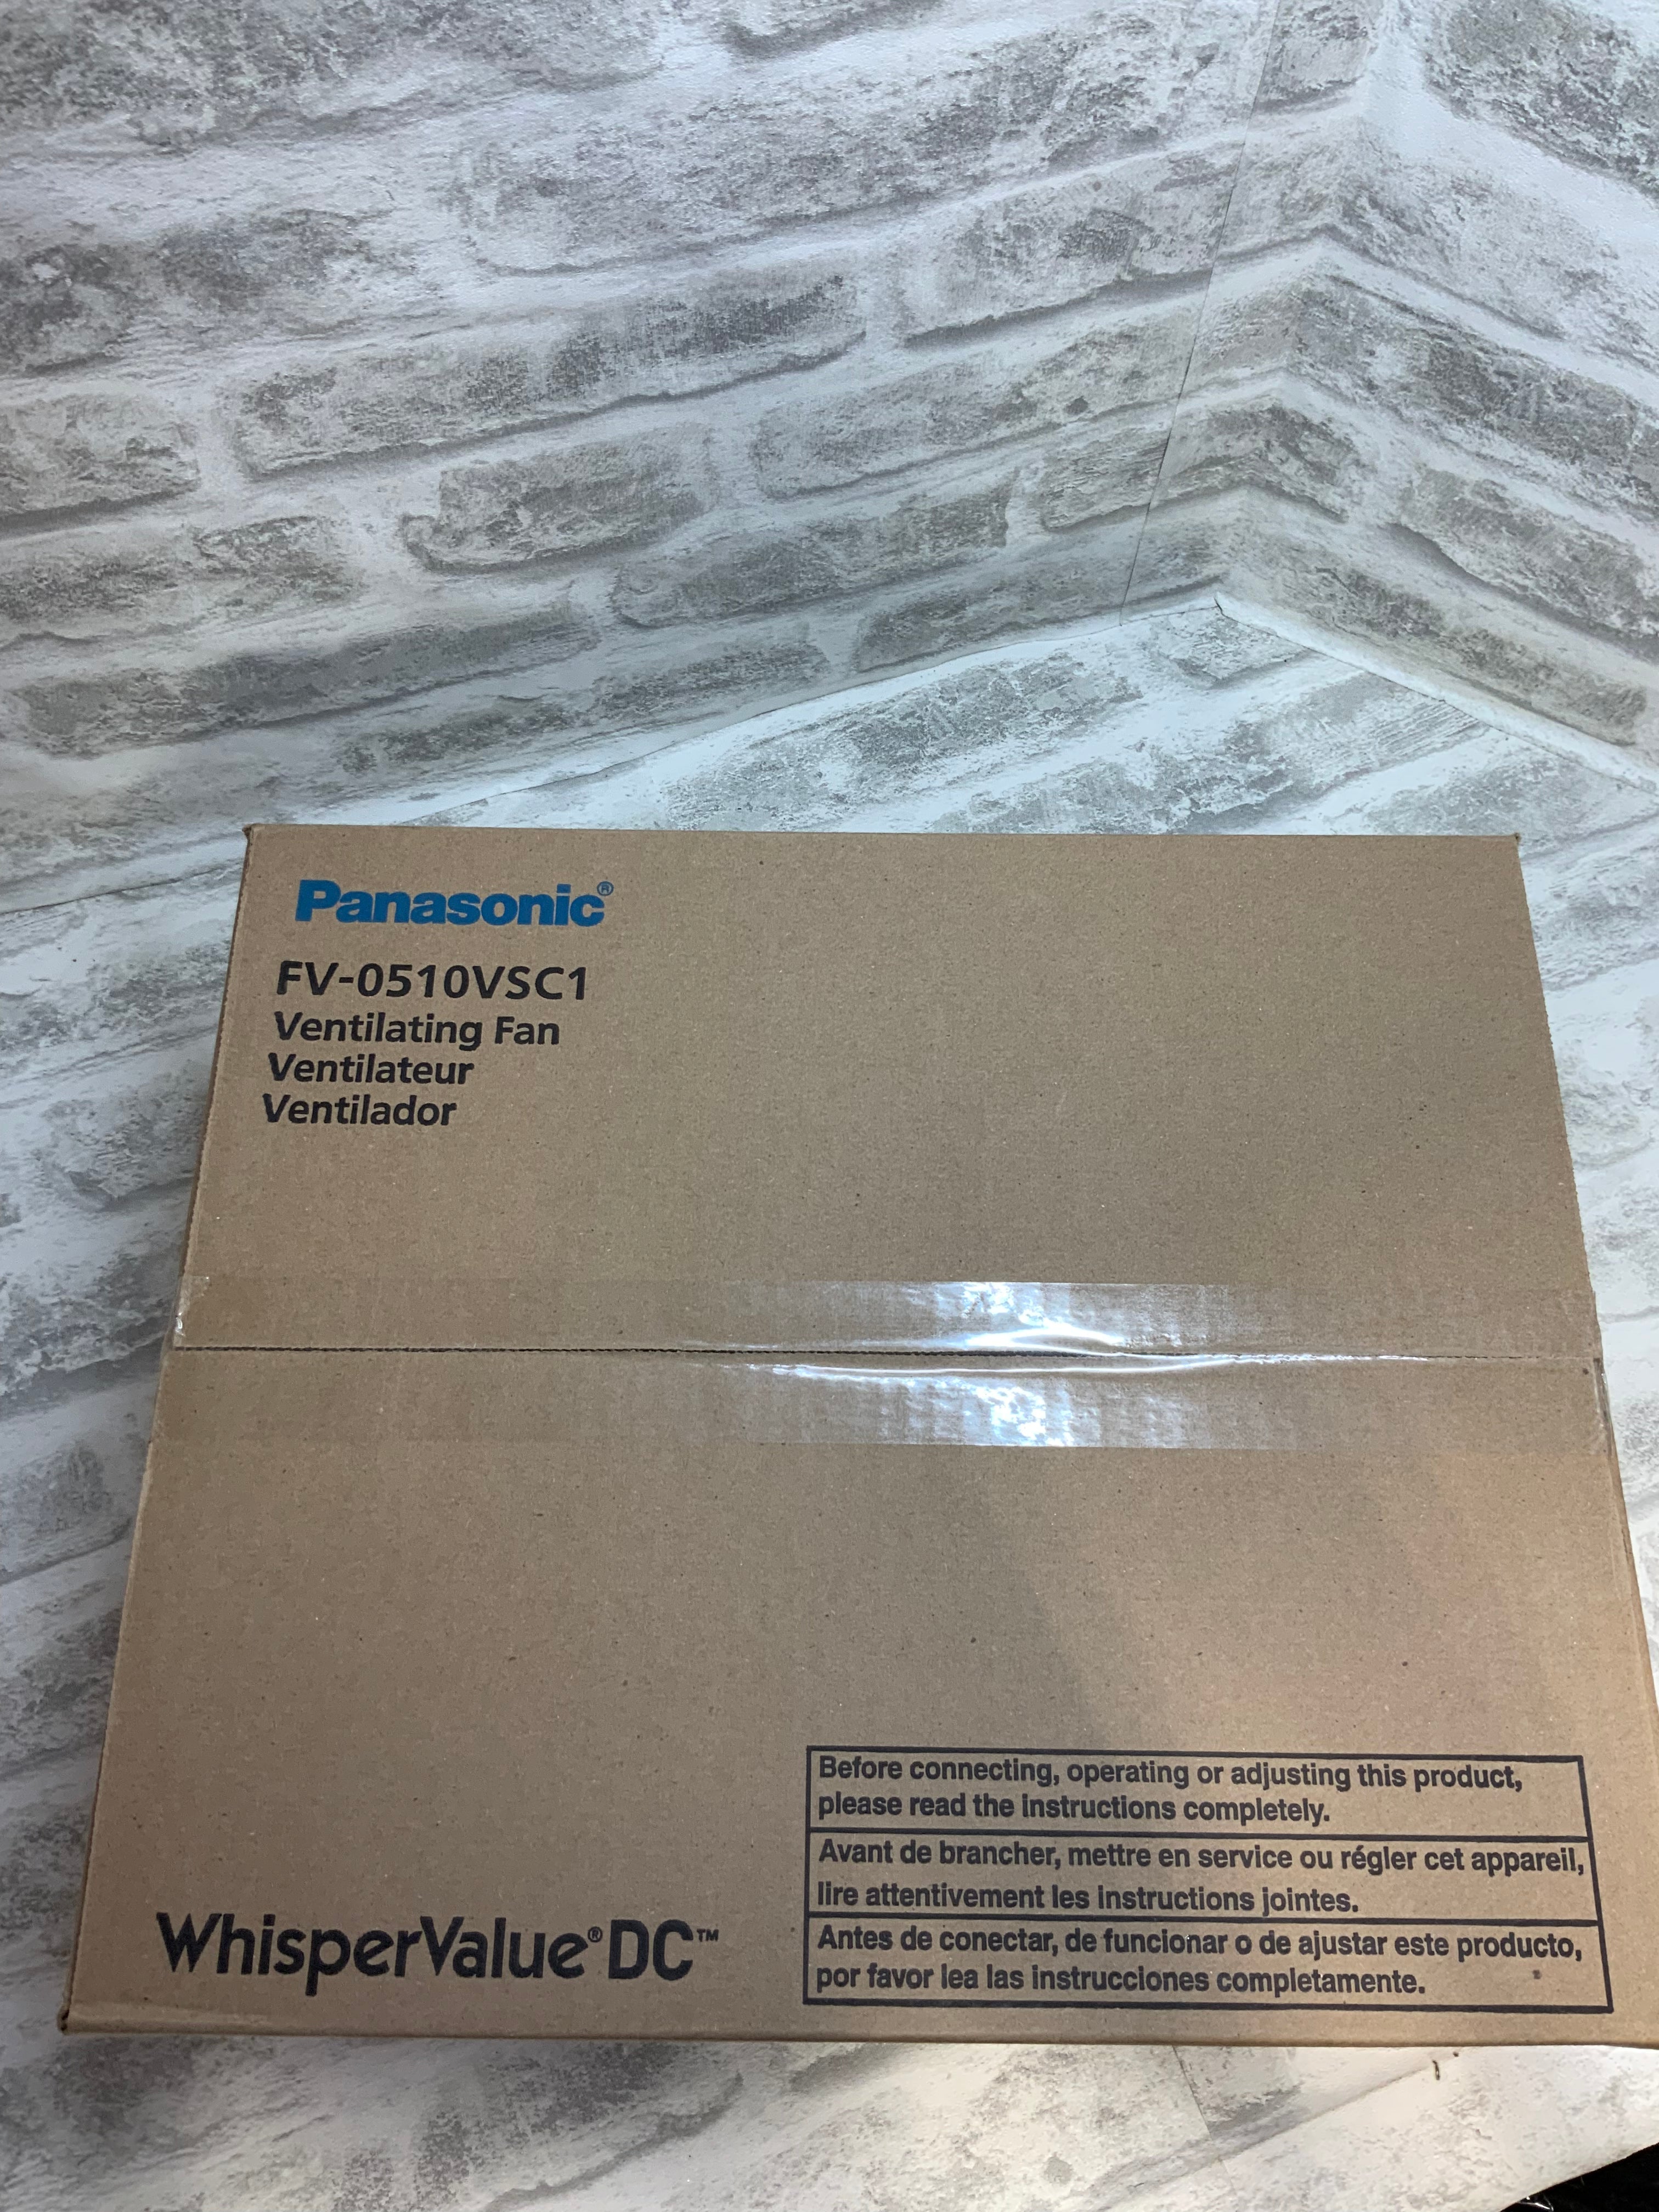 Panasonic WhisperValue DC Ventilation Fan with Condensation Sensor (7585694187758)